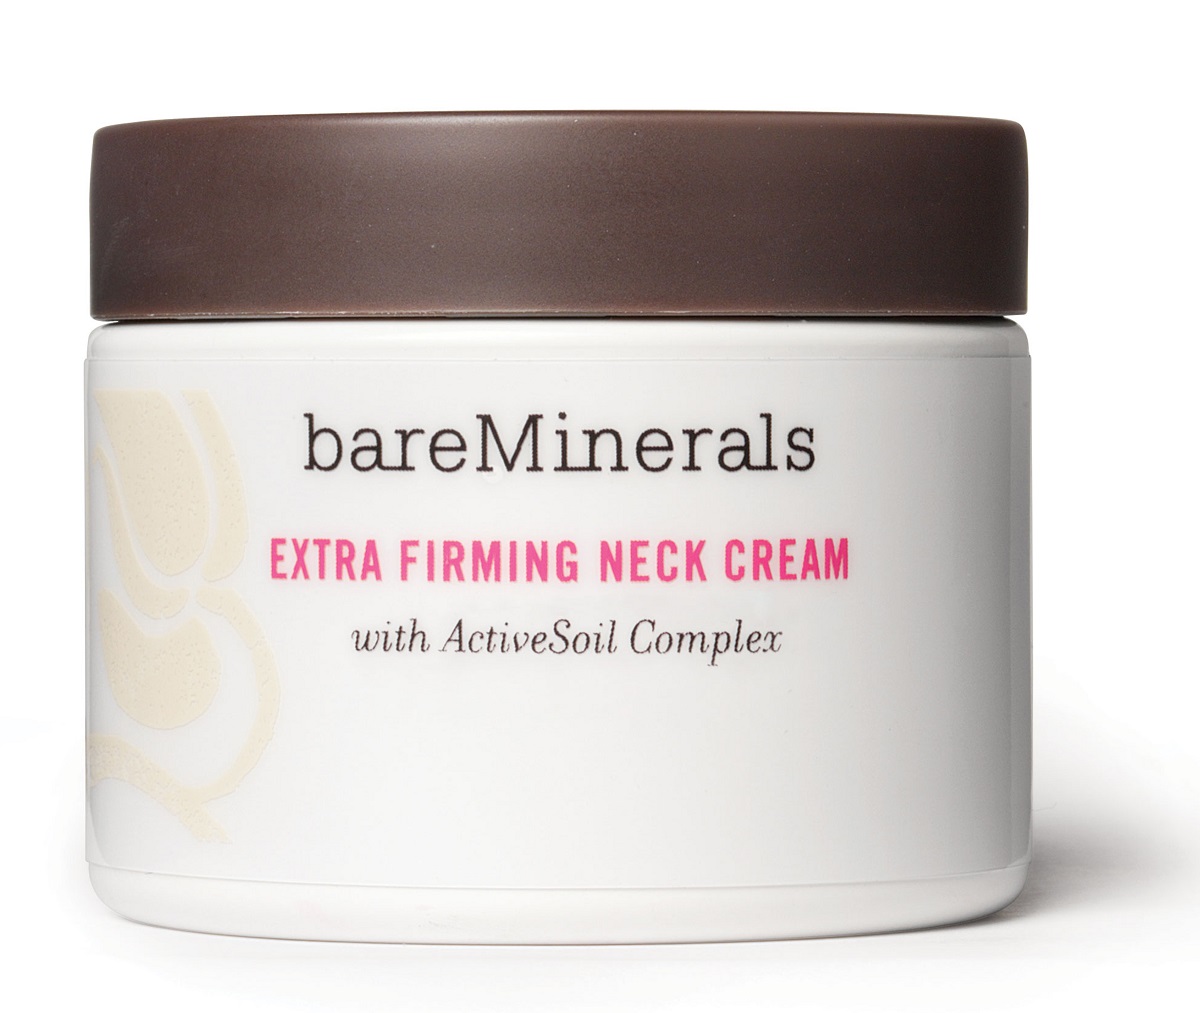 bareMinerals Extra Firming Neck Cream